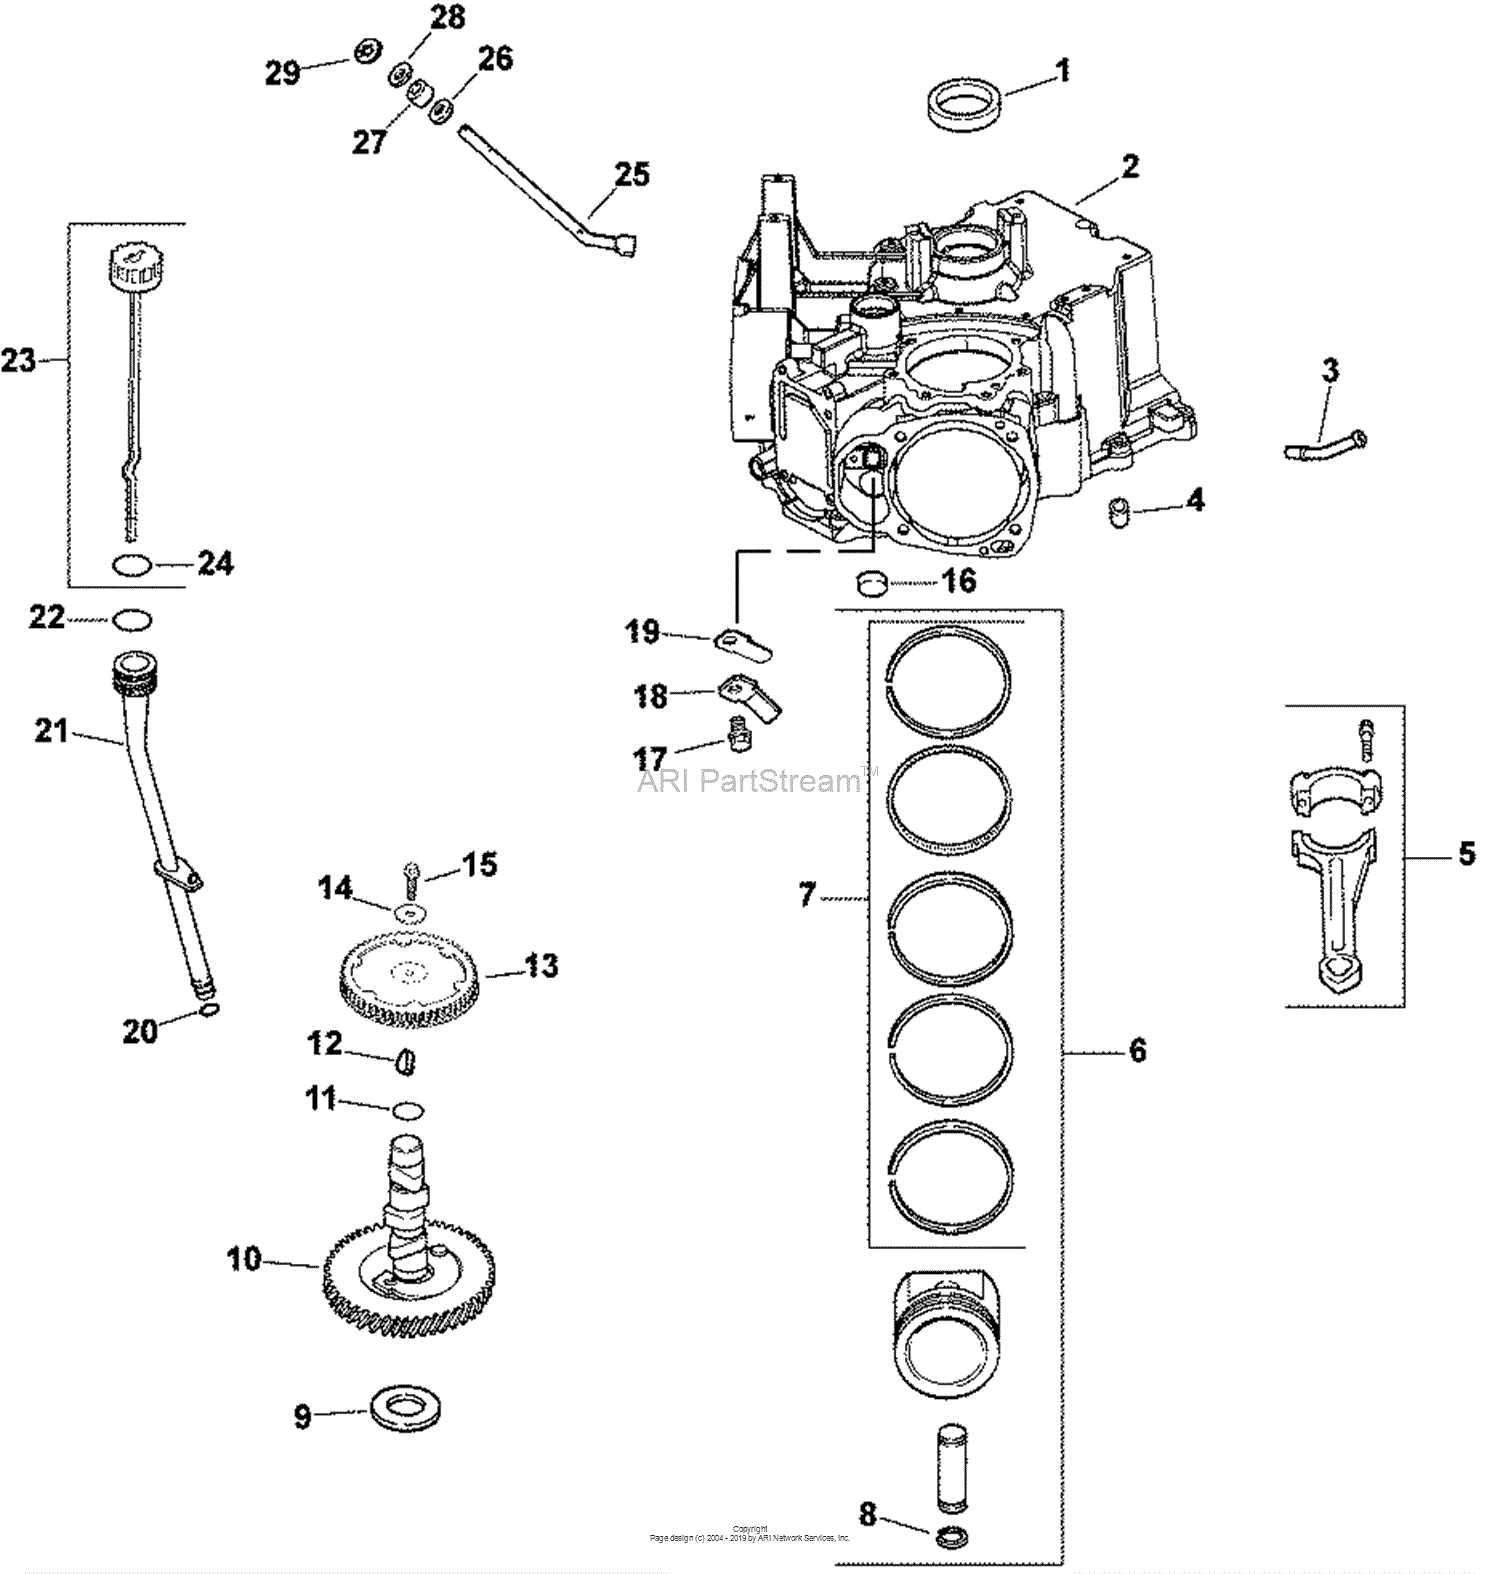 Kohler LV675-851512 TEXTRON 23 HP (17.2 kW) Parts Diagram for Crankcase ...